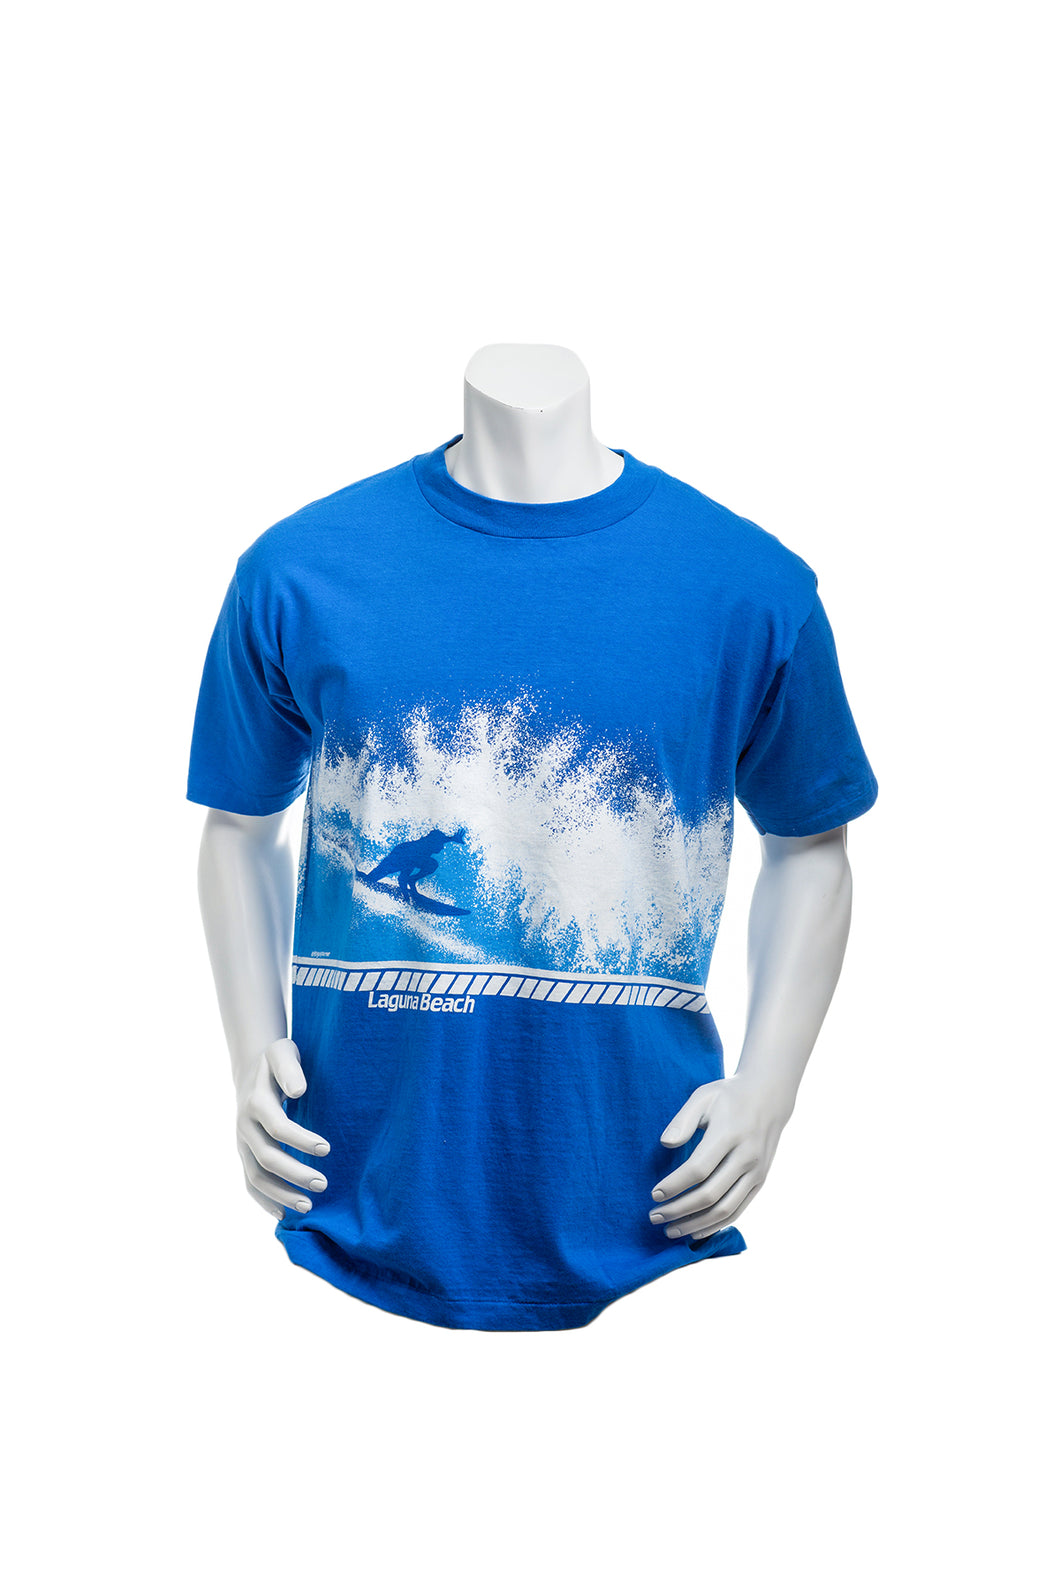 Vintage 1987 Laguna Beach, California Surfer Single Stitch T-Shirt Men's XL